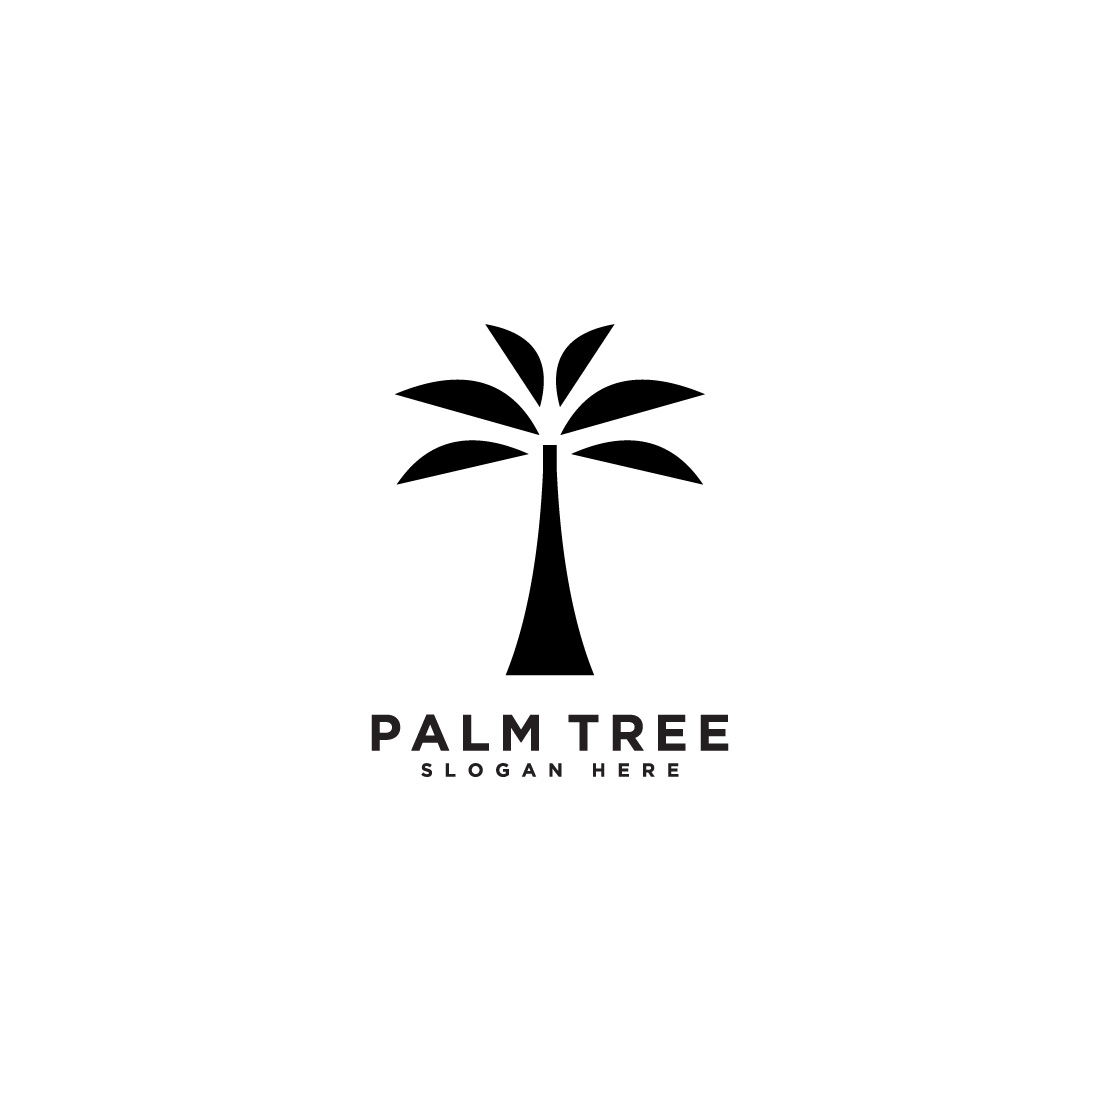 palm tree logo cover image.